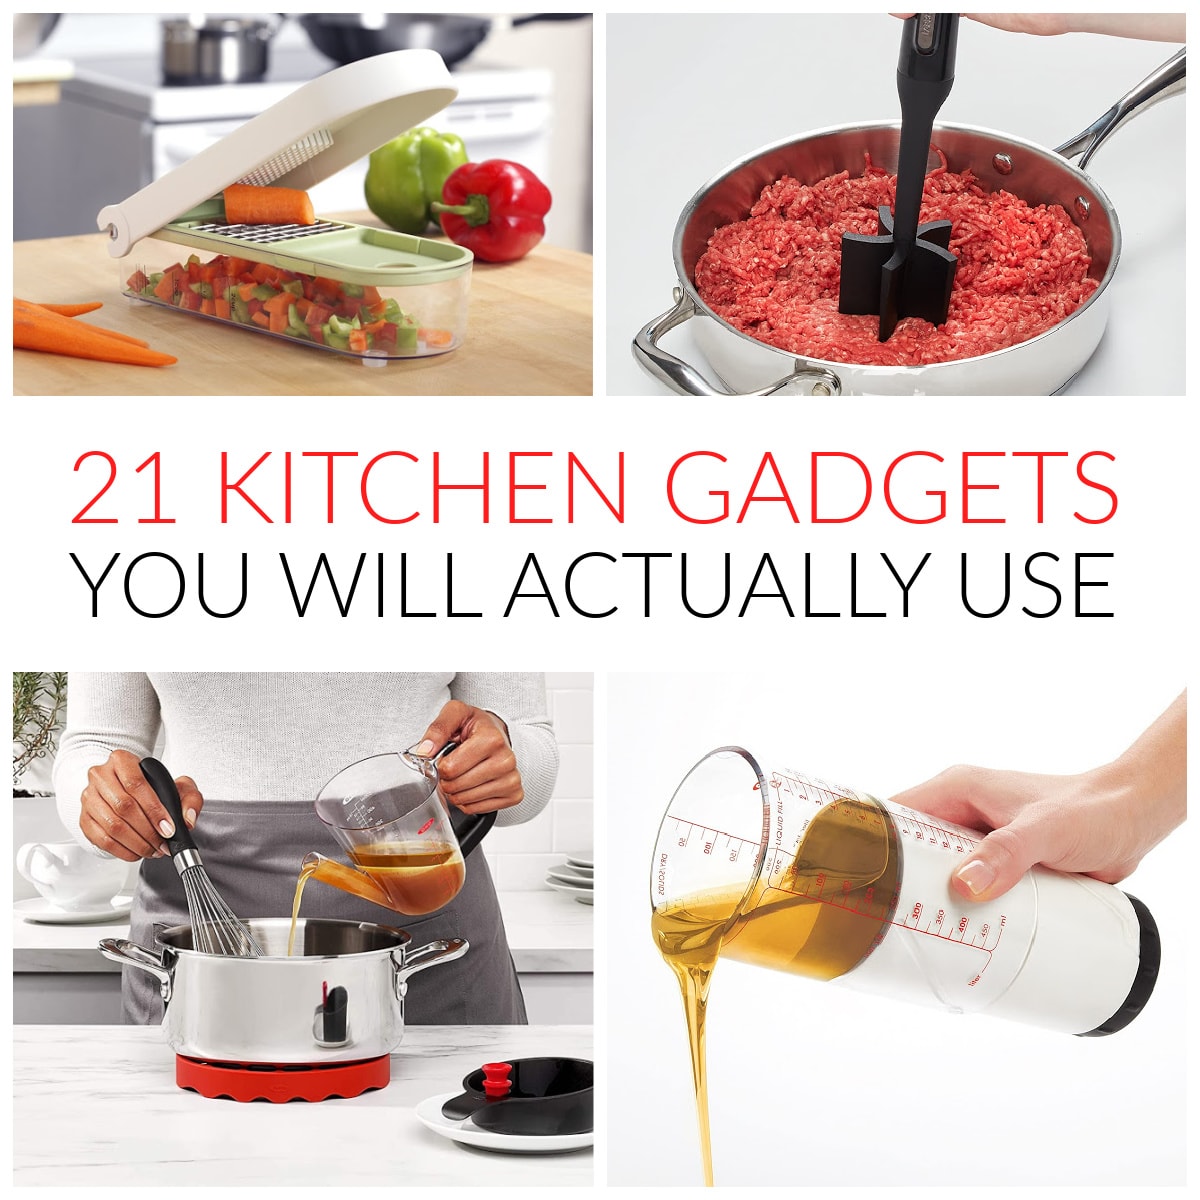 https://amandascookin.com/wp-content/uploads/2020/10/kitchen-gadgets-SQ.jpg